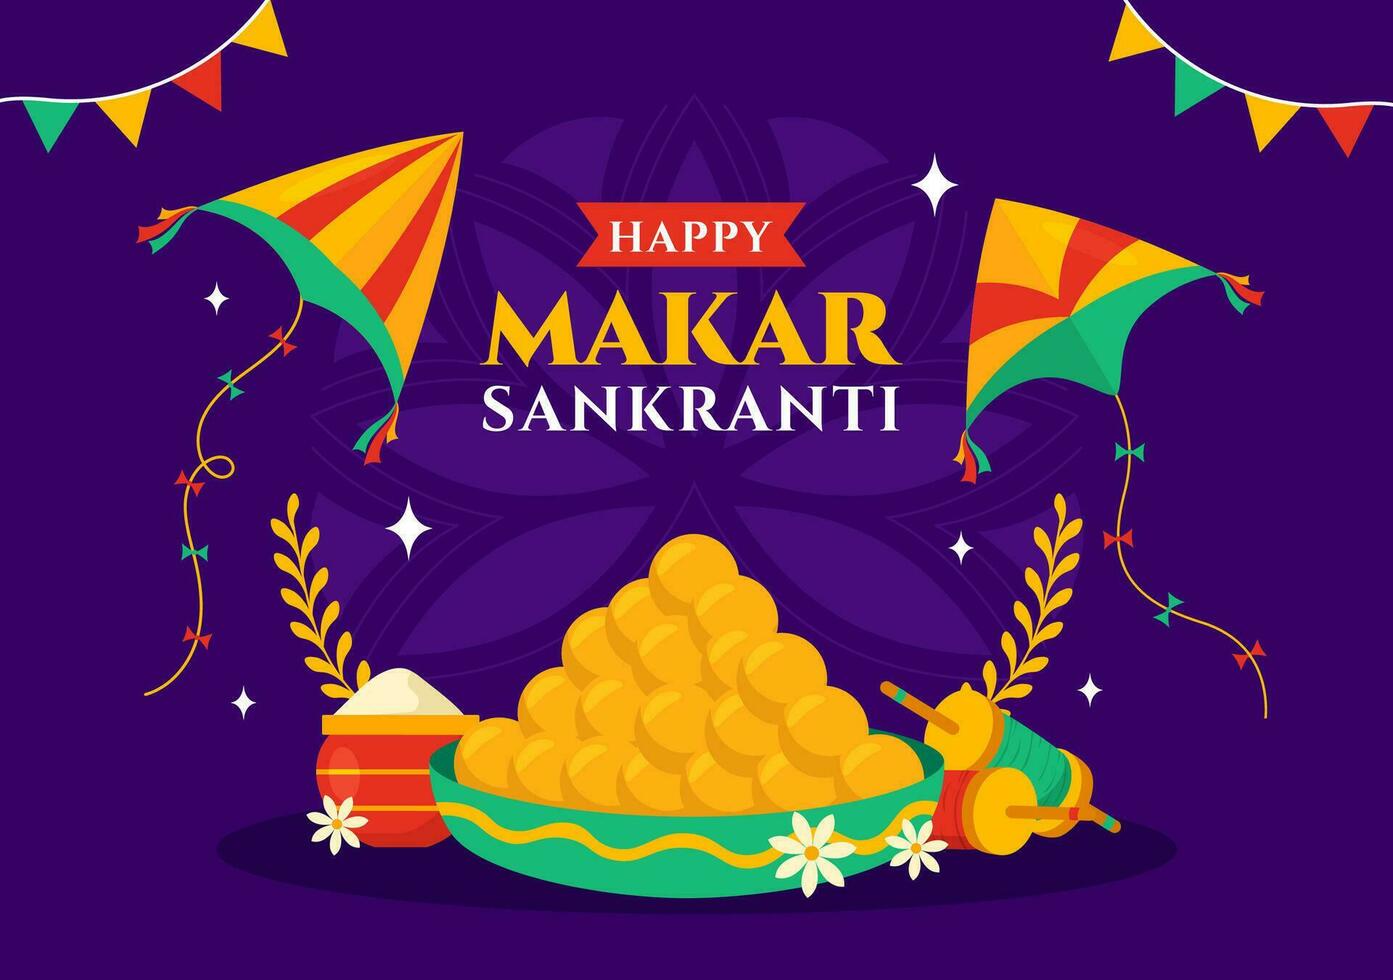 Makar Sankranti Vector Illustration. Translation the Harvest Festival. Indian Festive with Flying Colorful Kites And String Spools in Flat Background